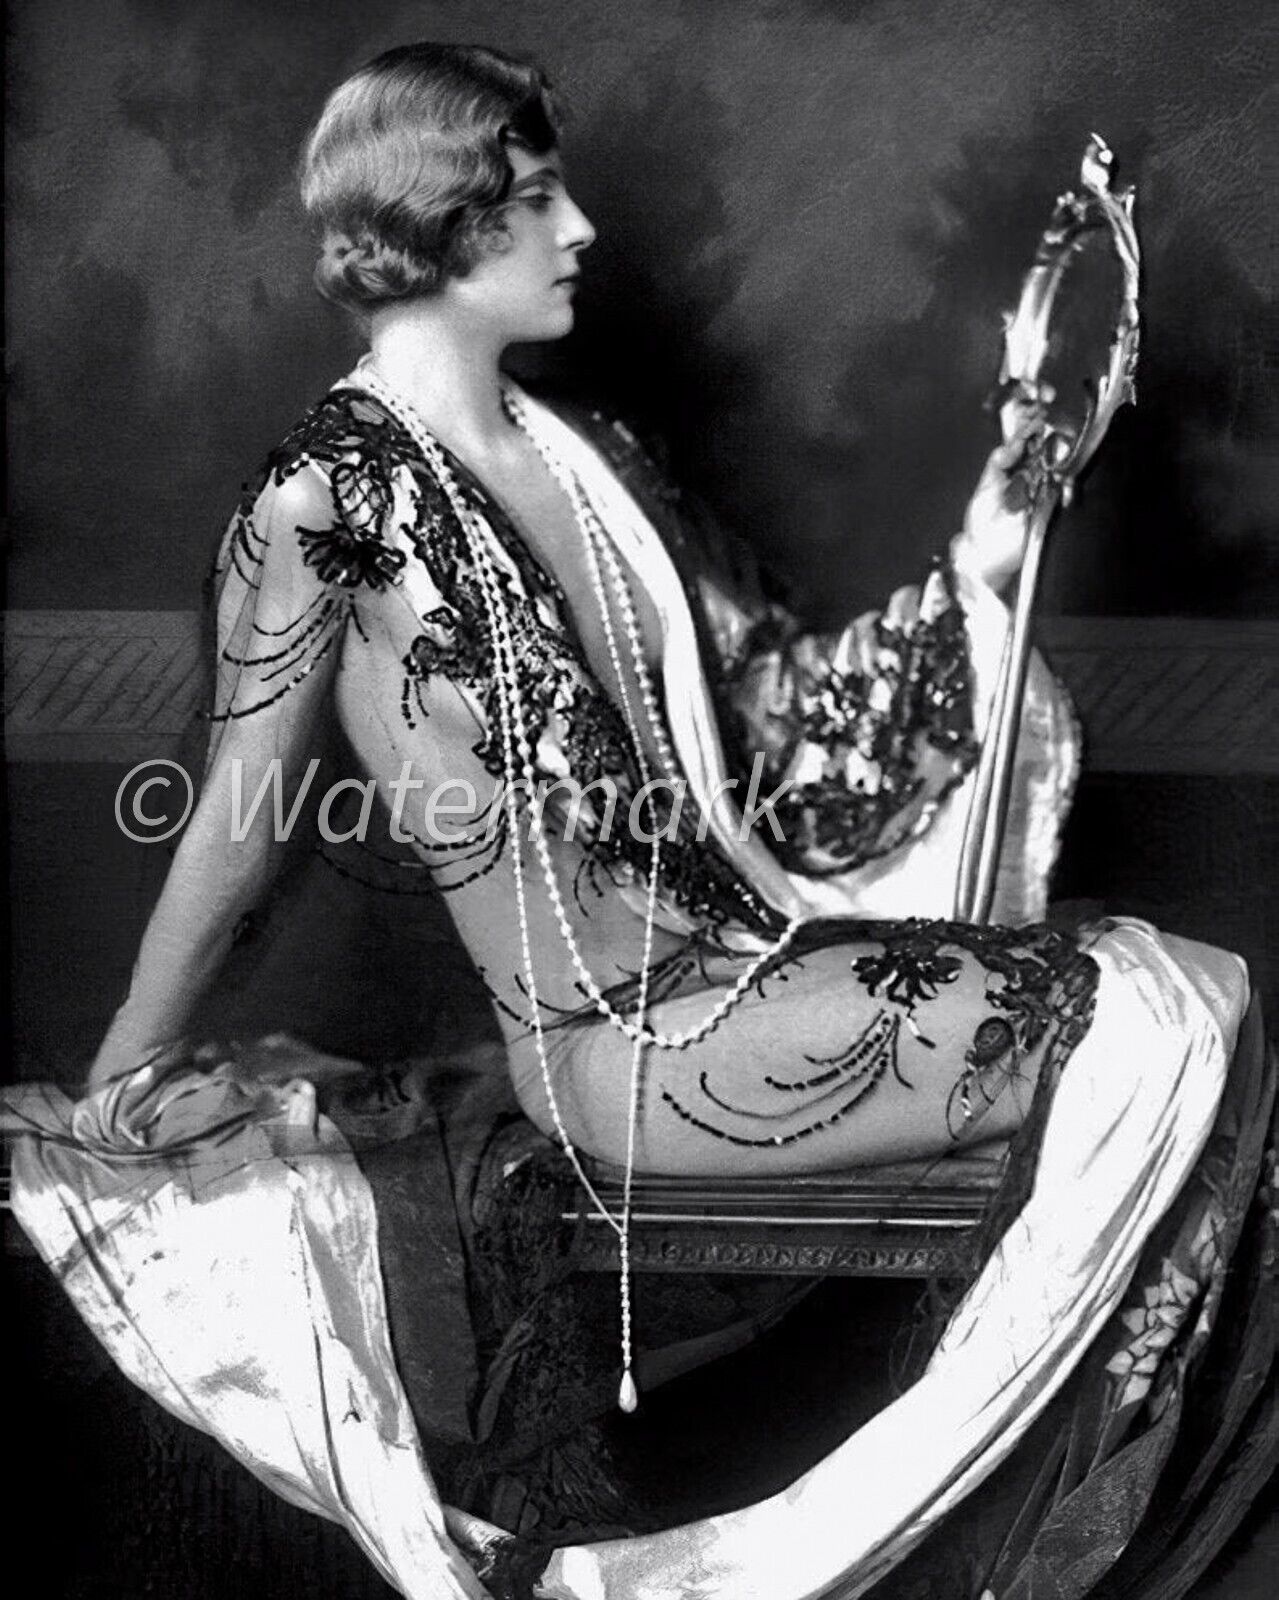 8x10 PUBLICITY PHOTO 1910s - 1920s Ziegfeld Follies dancer Girl Vintage